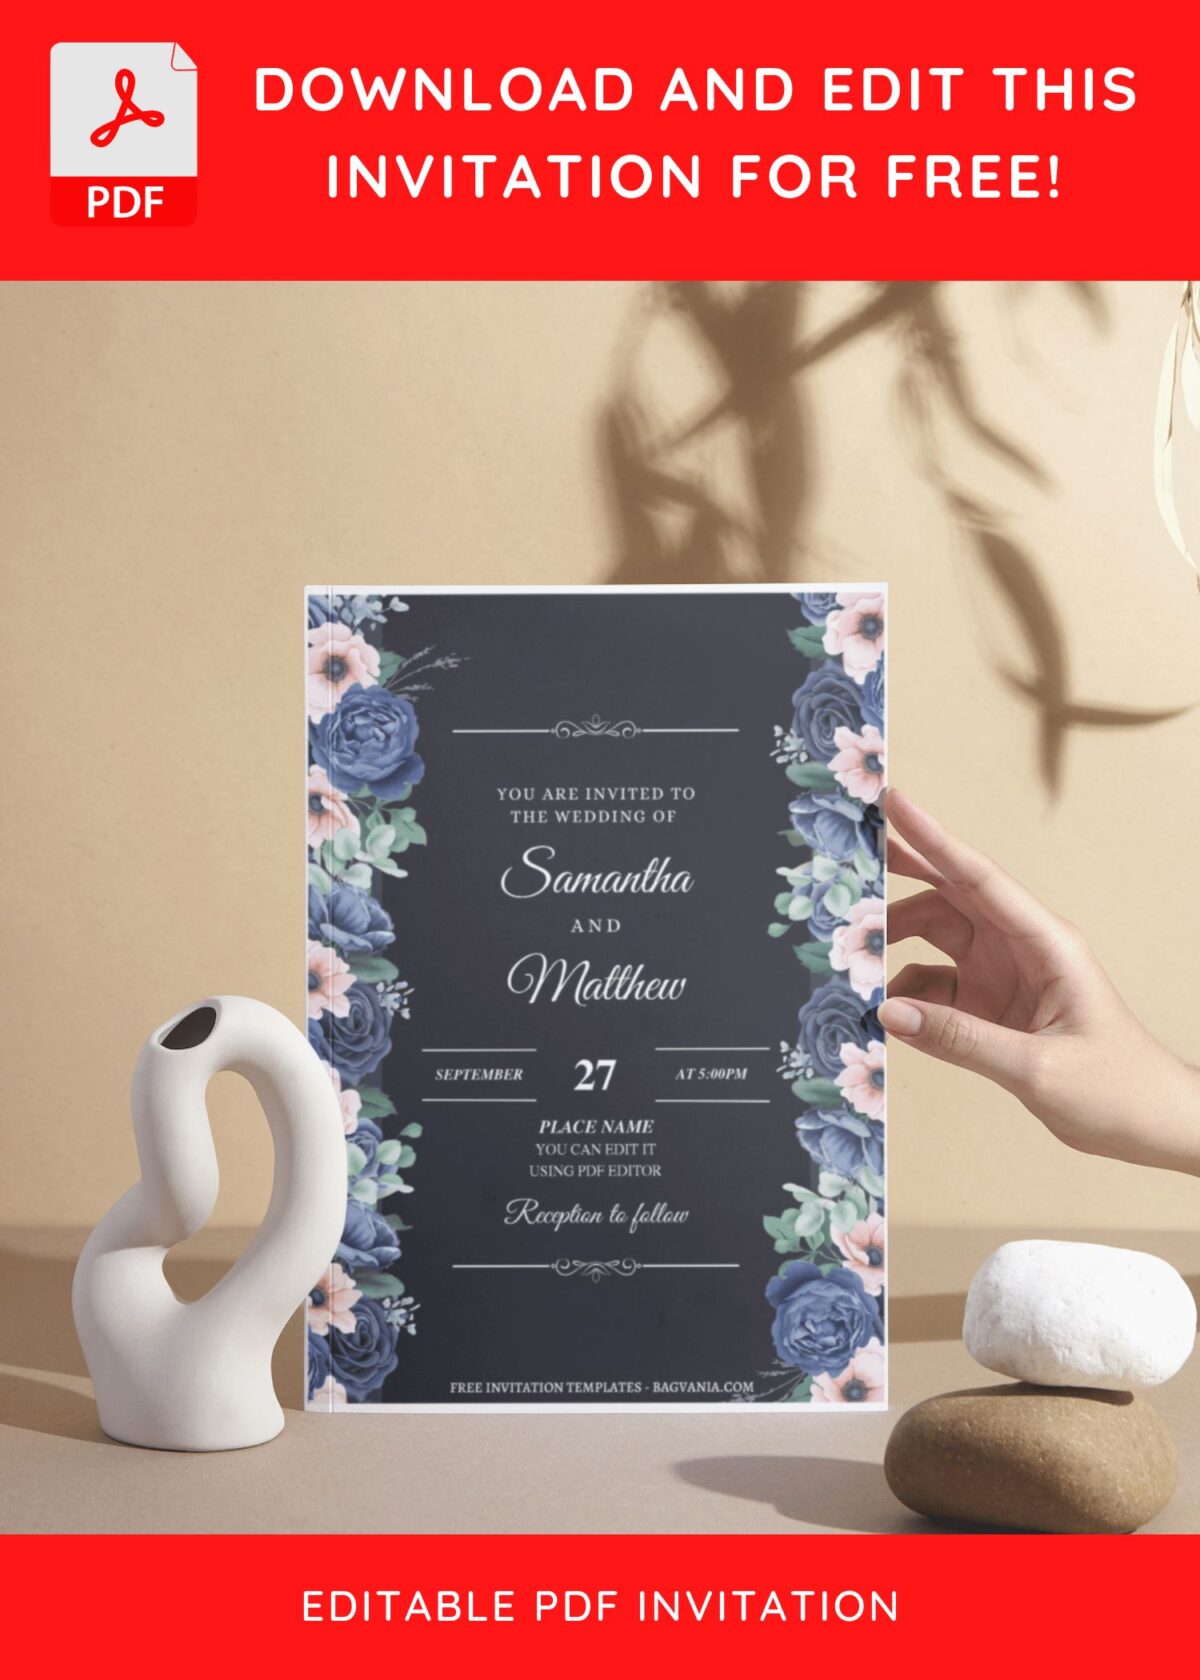 (Free Editable PDF) Anemone And Rose Wedding Invitation Templates I